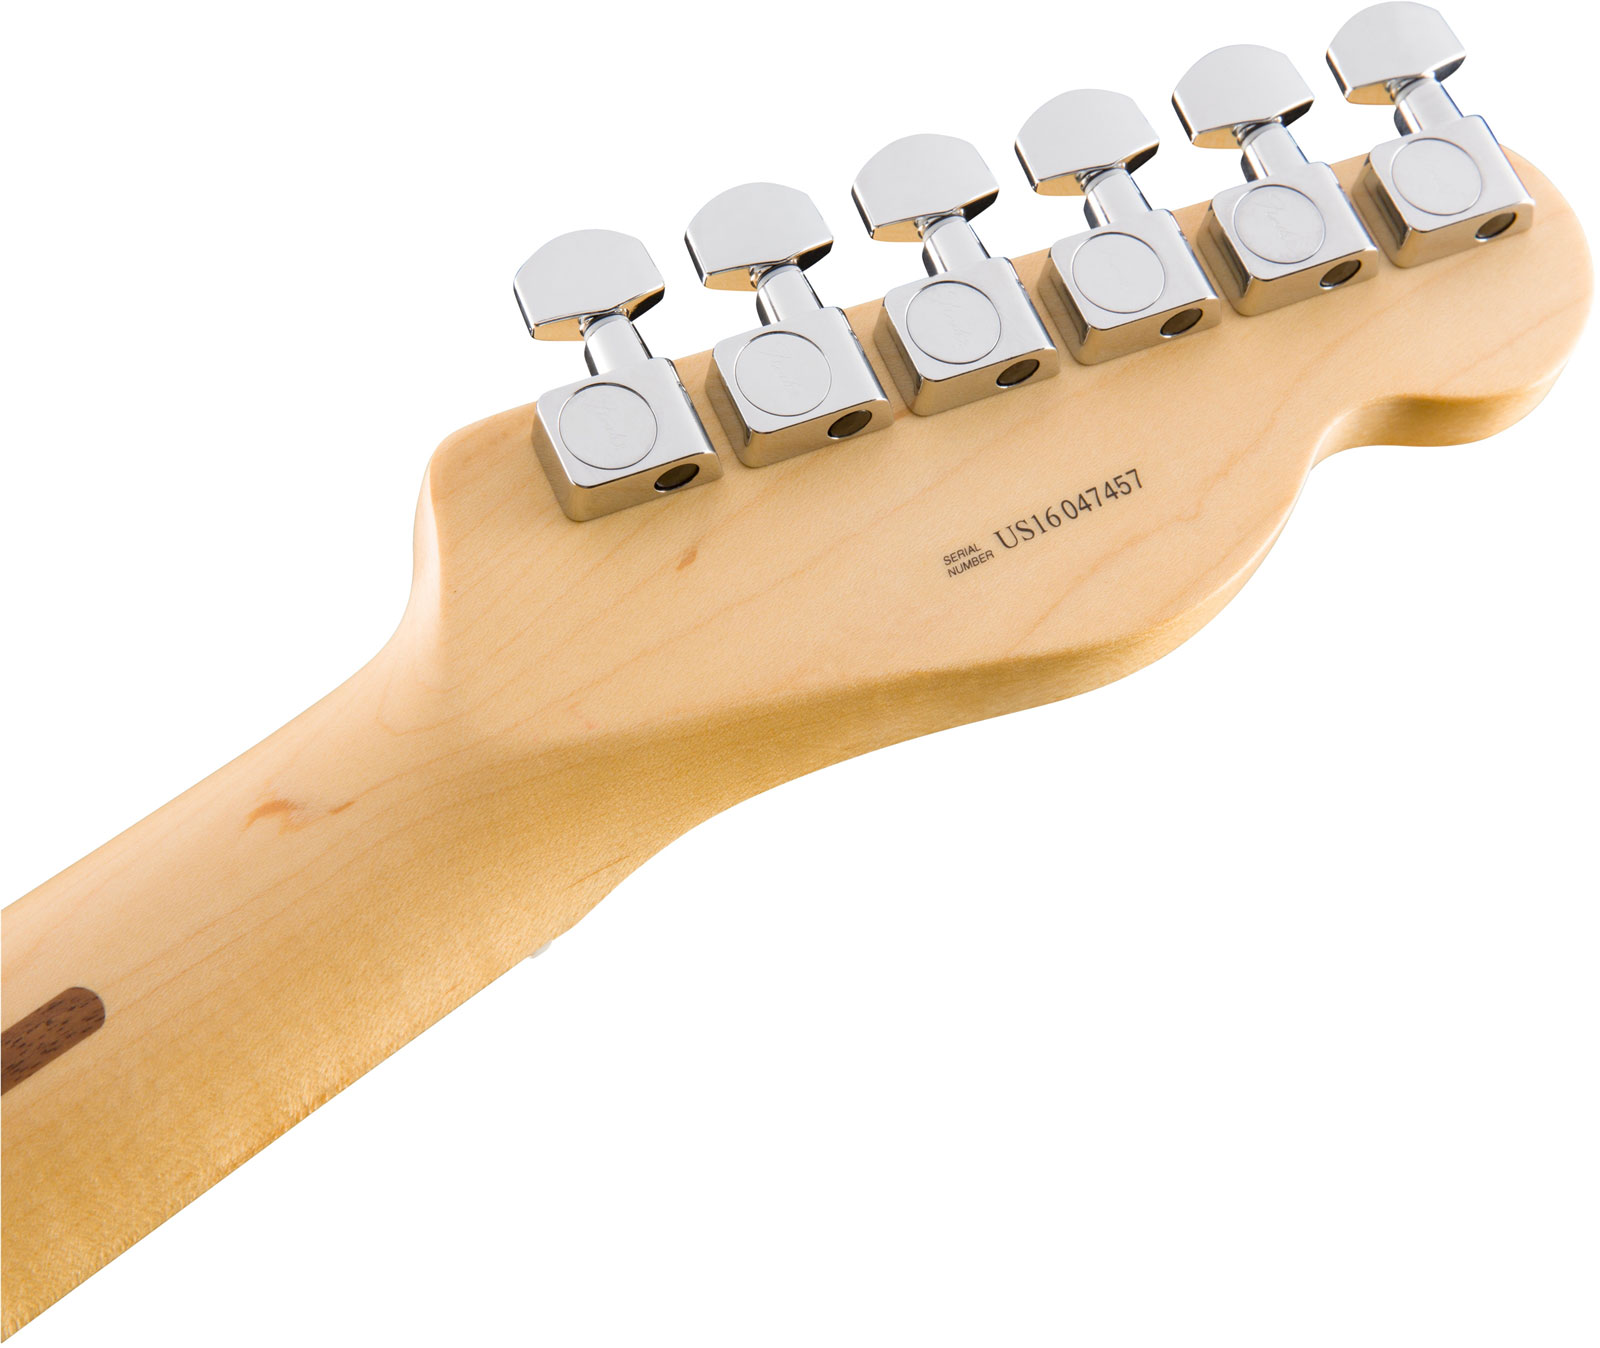 Fender Tele American Professional Lh Usa Gaucher 2s Mn - Butterscotch Blonde - Left-handed electric guitar - Variation 4